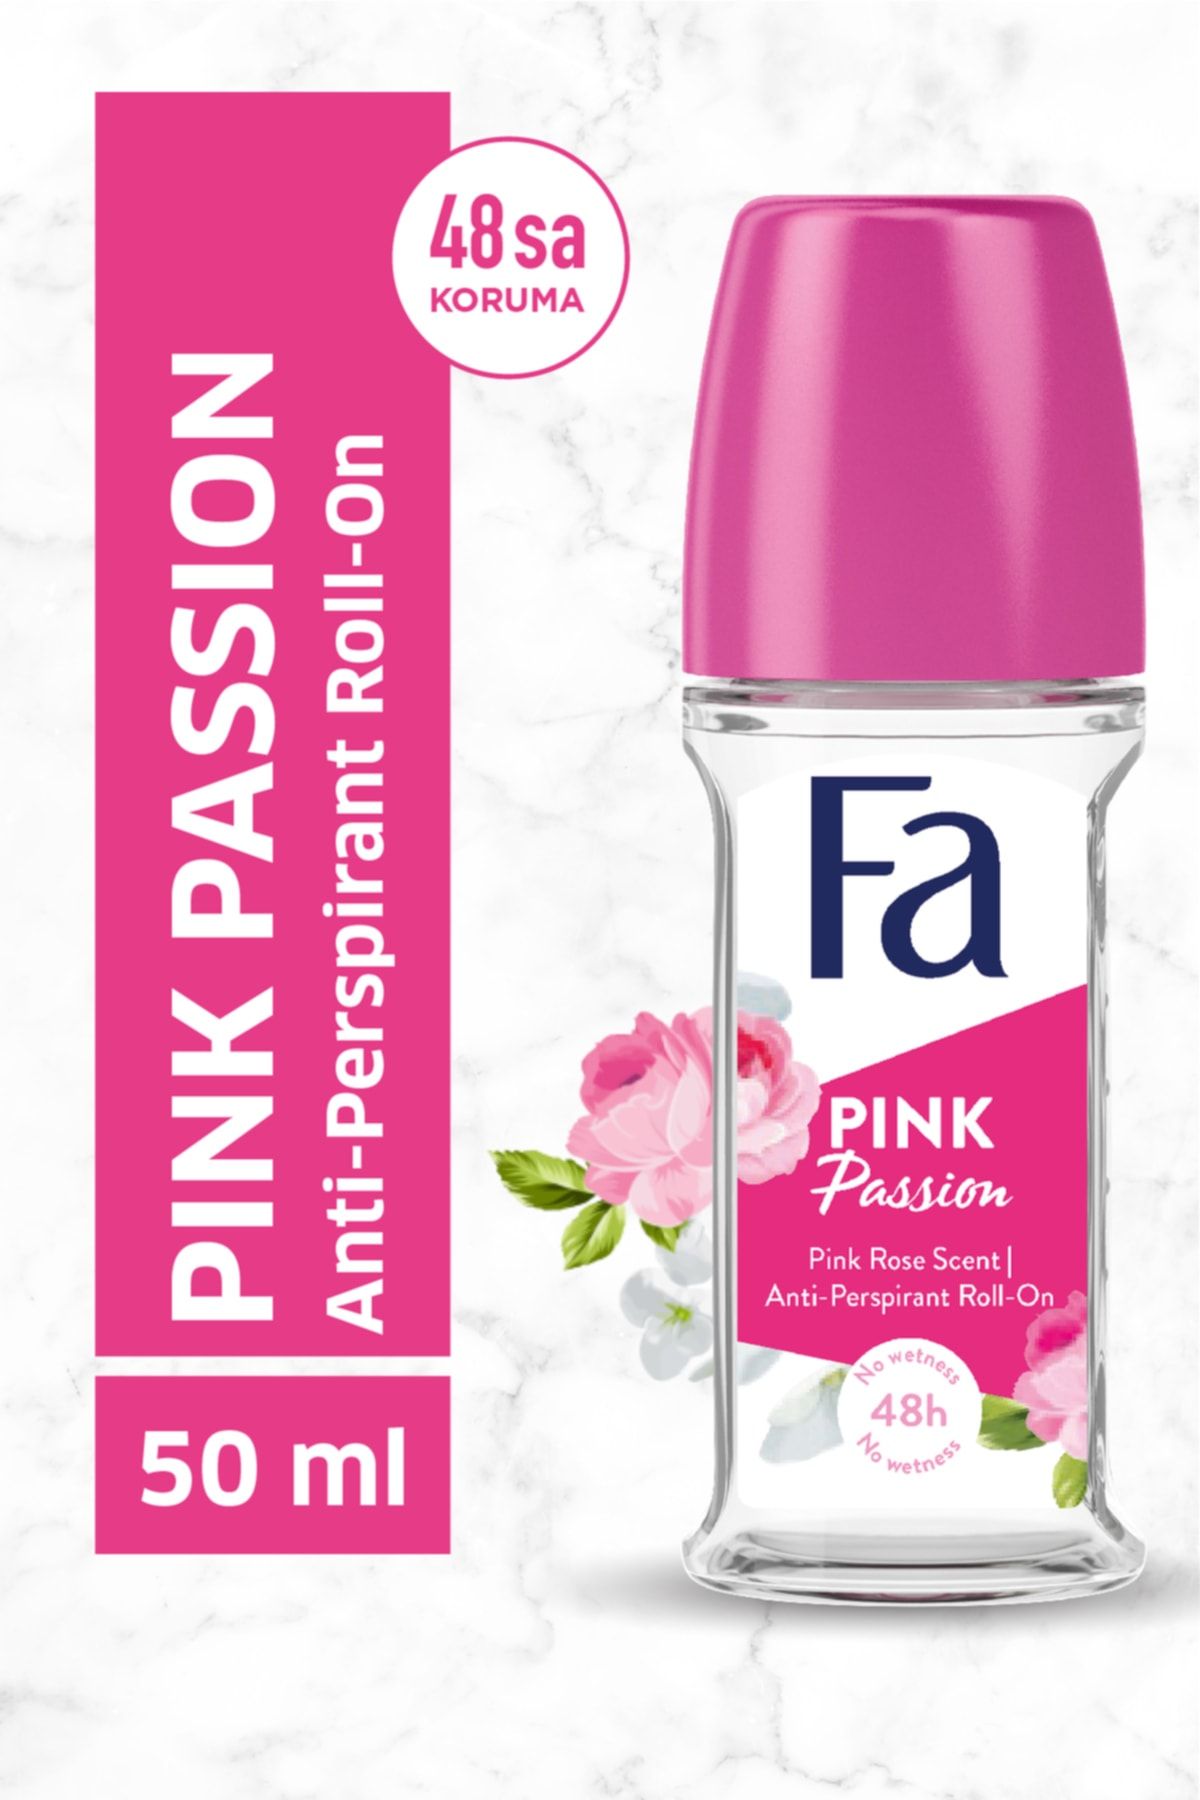 Fa Pınk Passıon Roll-On 50 ml